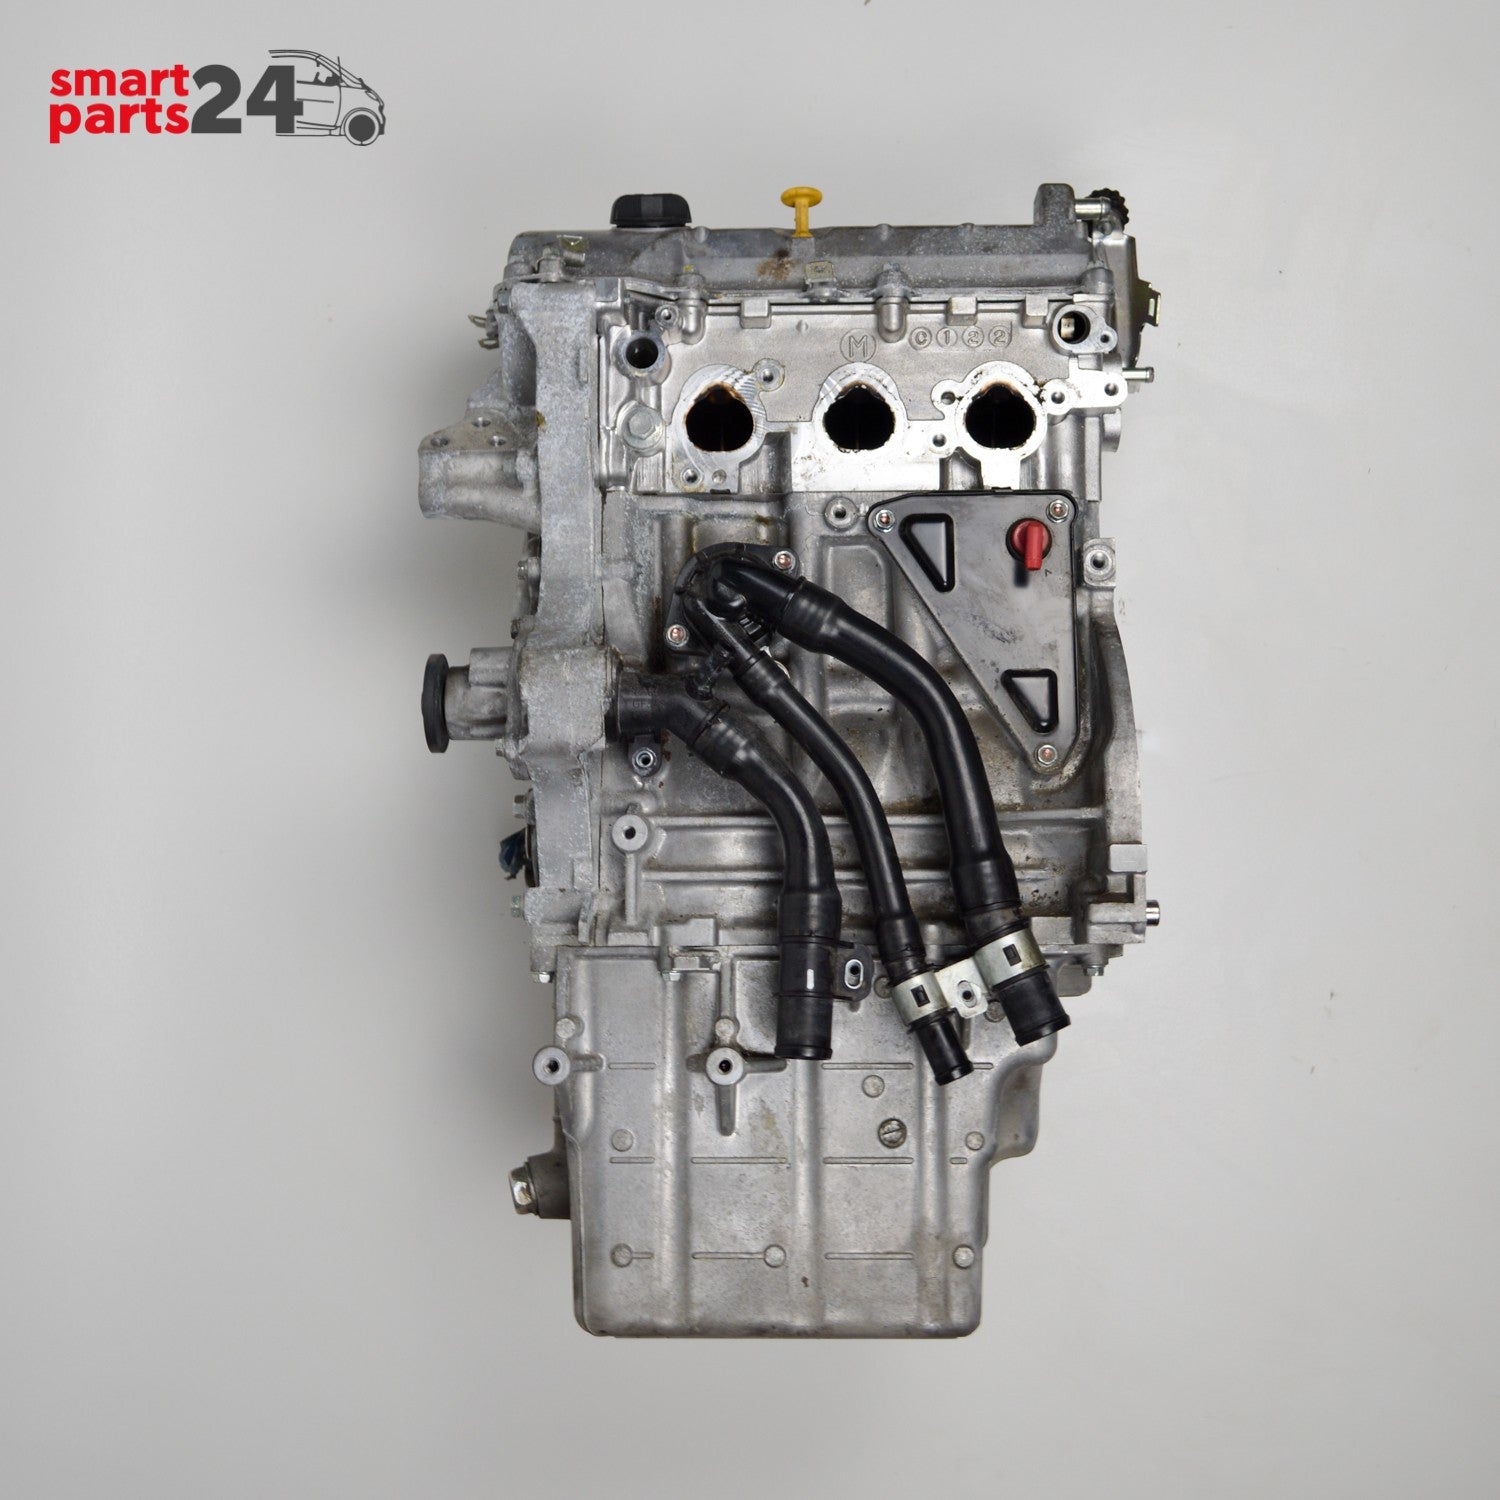 Smart Fortwo 451 Engine Petrol 999cc 1.0 2007-2009